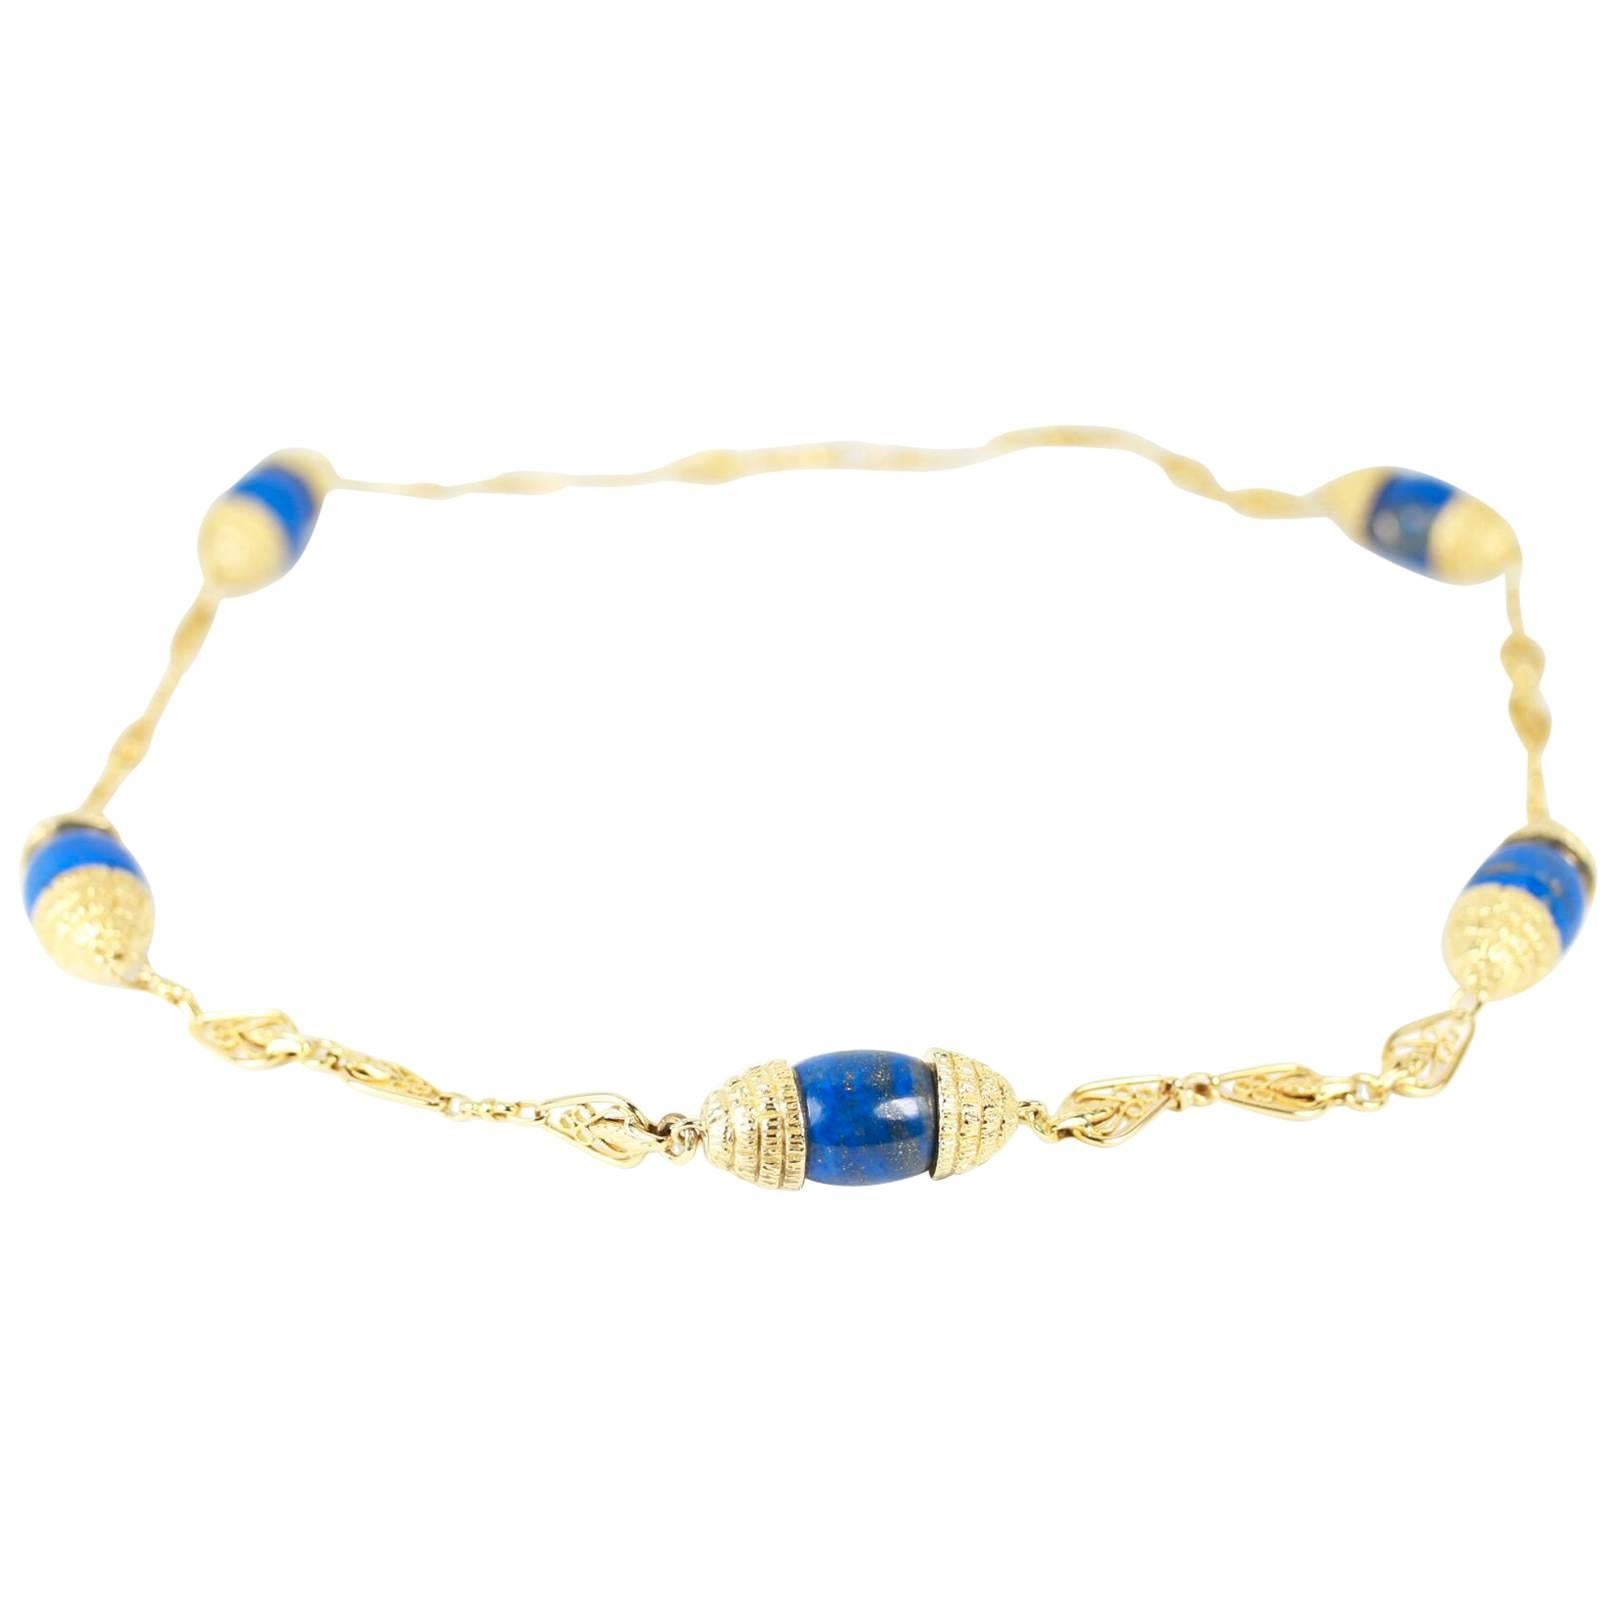 Lapis Lazuli Link Necklace